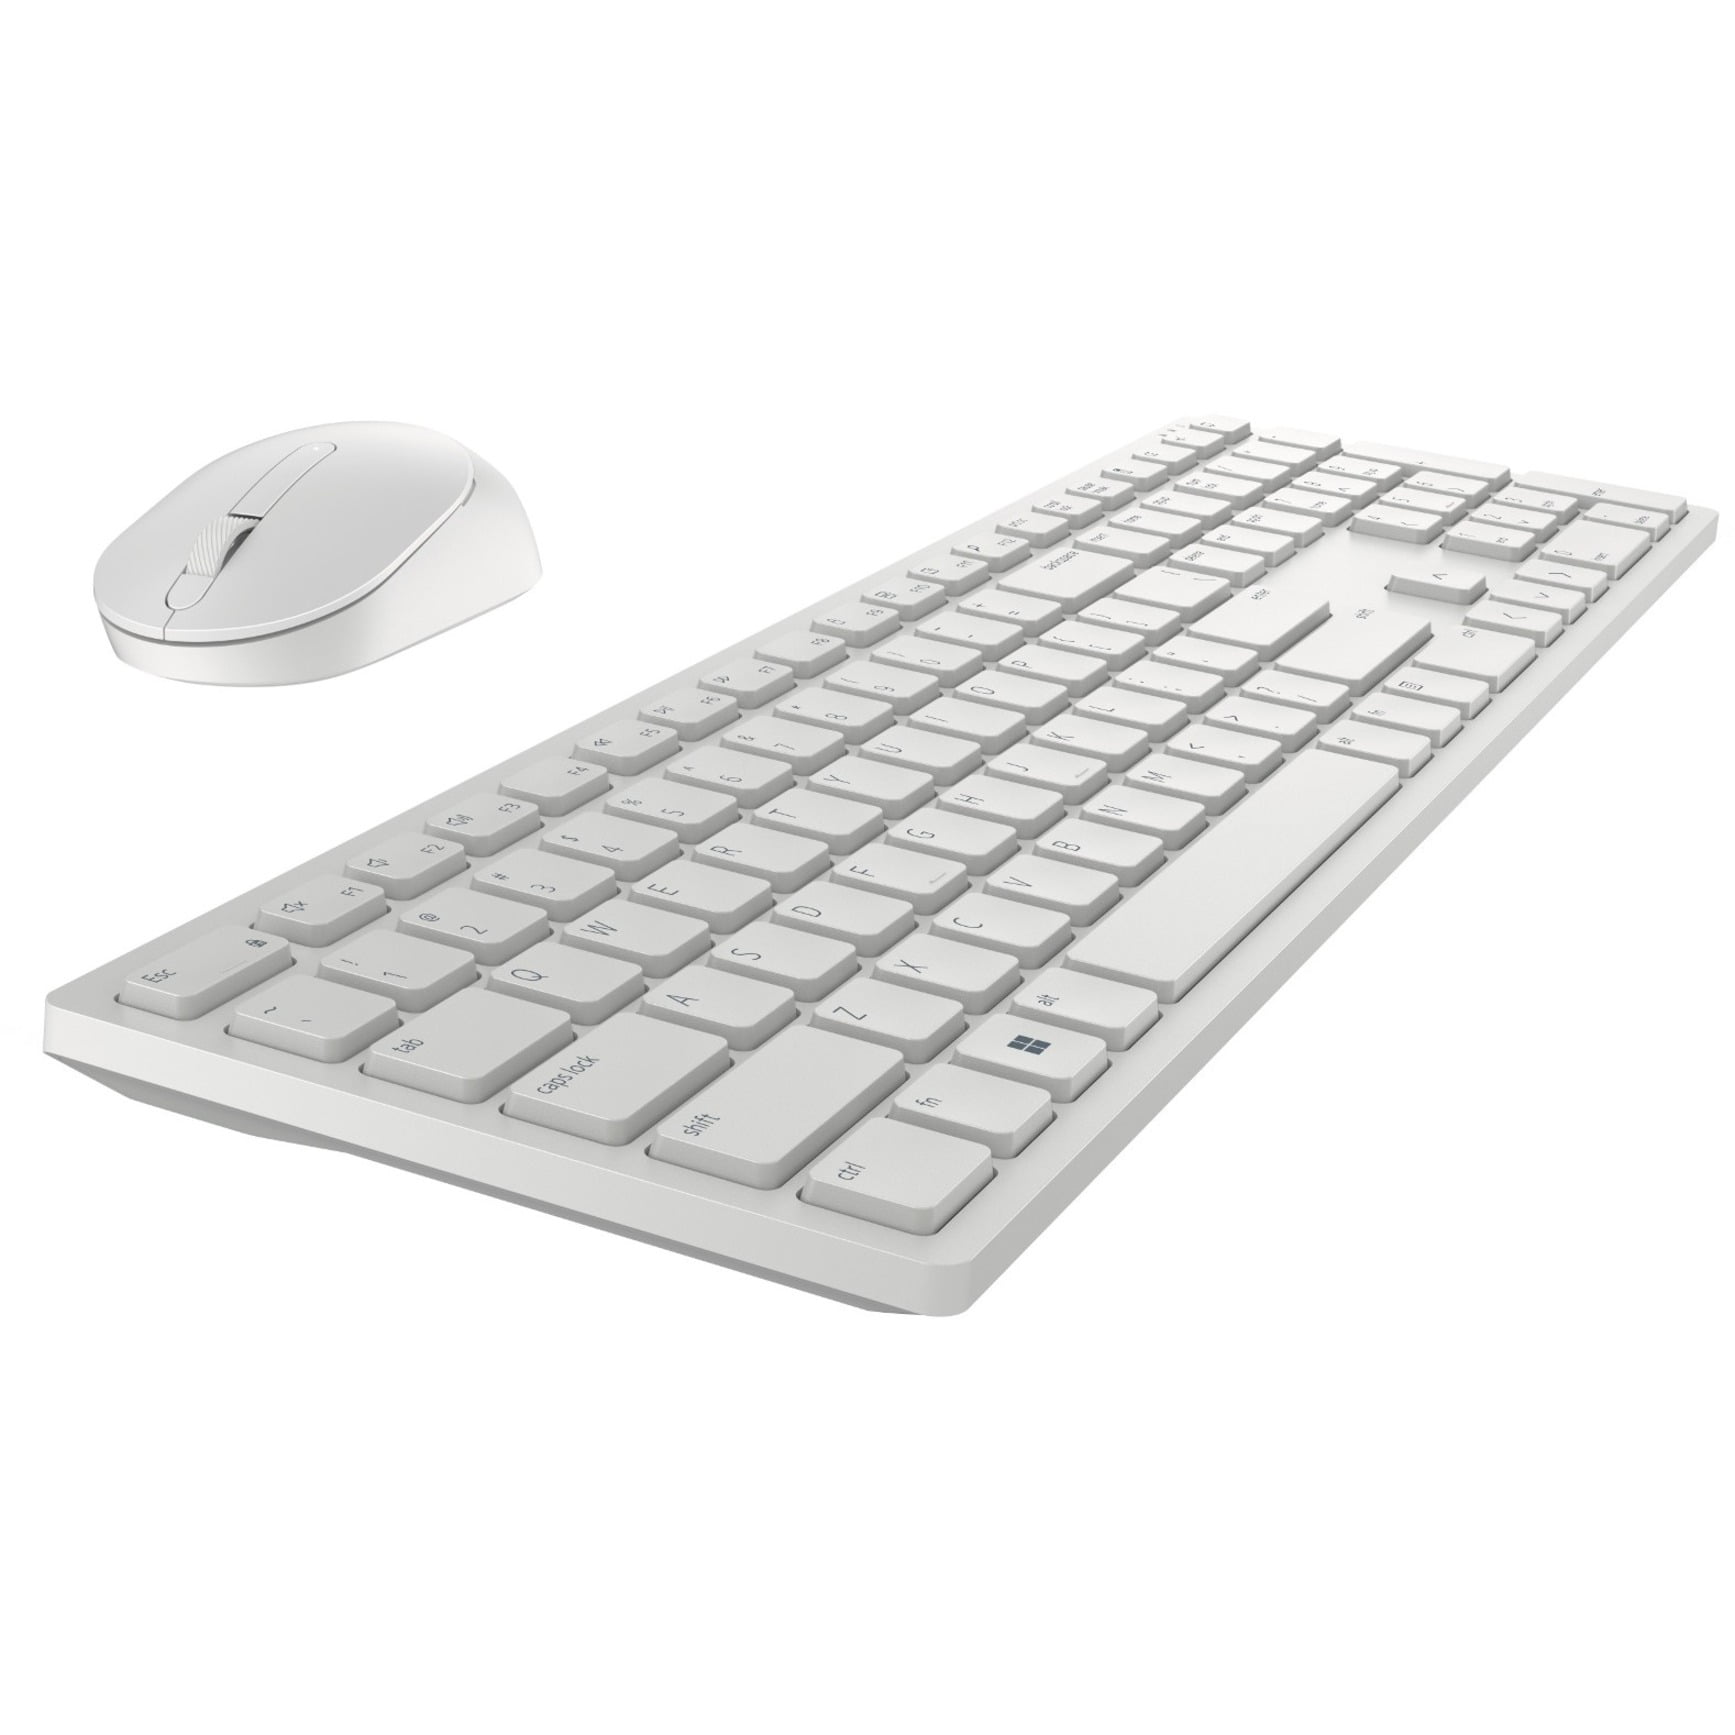 Dell Pro Wireless Keyboard and Mouse, KM5221W White - Walmart.com